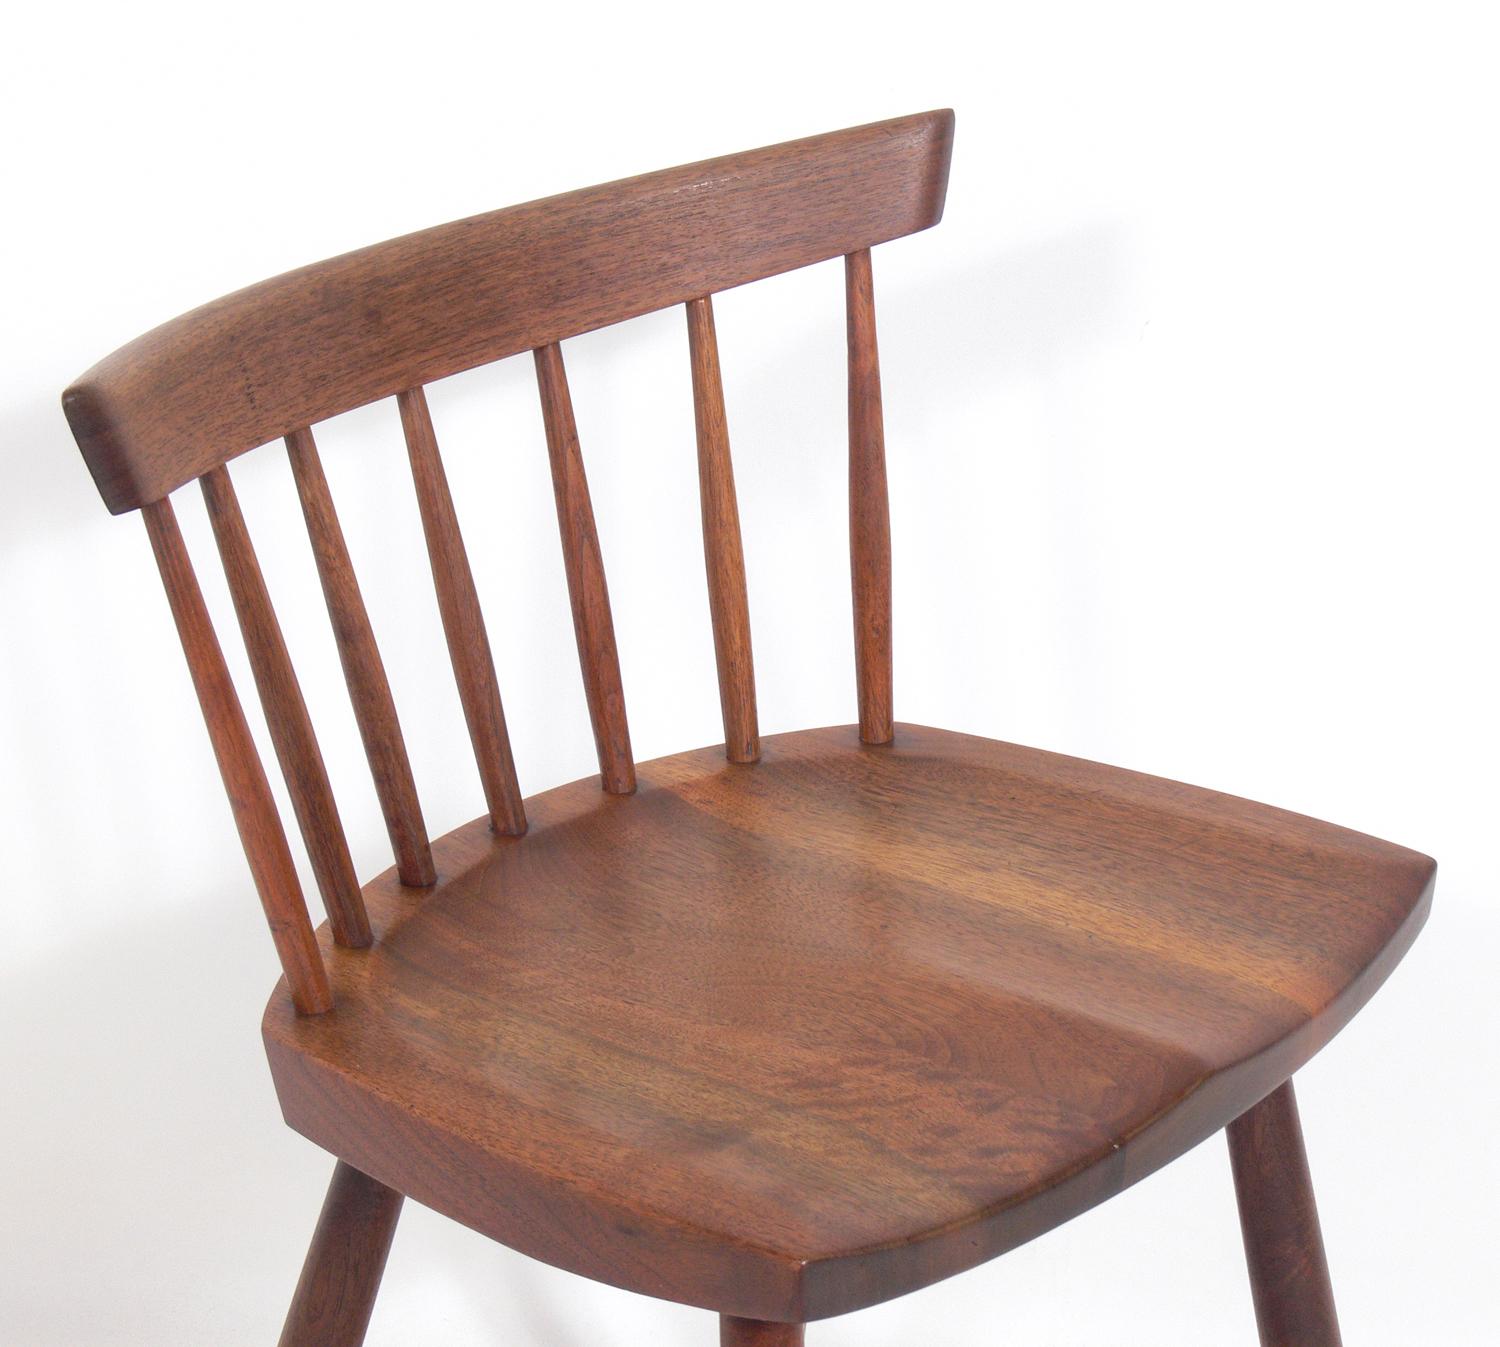 George Nakashima chair, American, circa 1960s. Handmade by Nakashima Studios for Mr. Rosenthal, circa 1960s. Signed with customer's name 